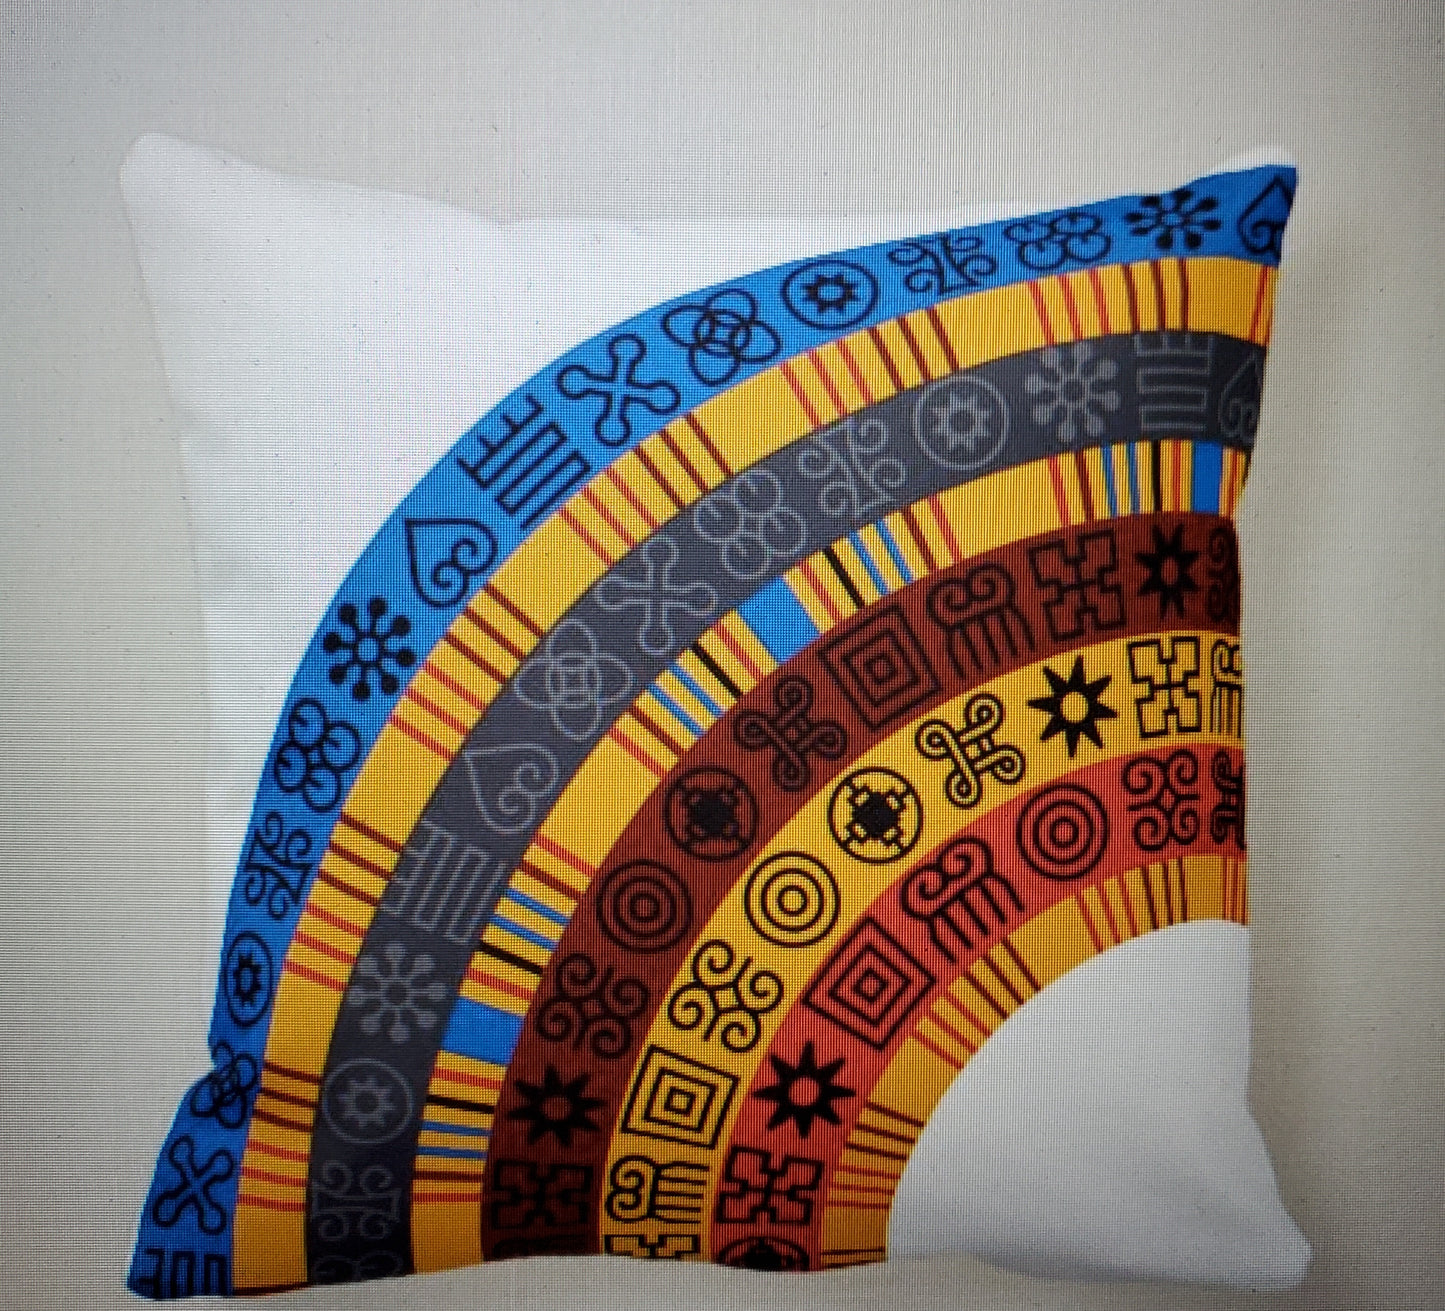 Pillow Talk - Graphic Design Pillows